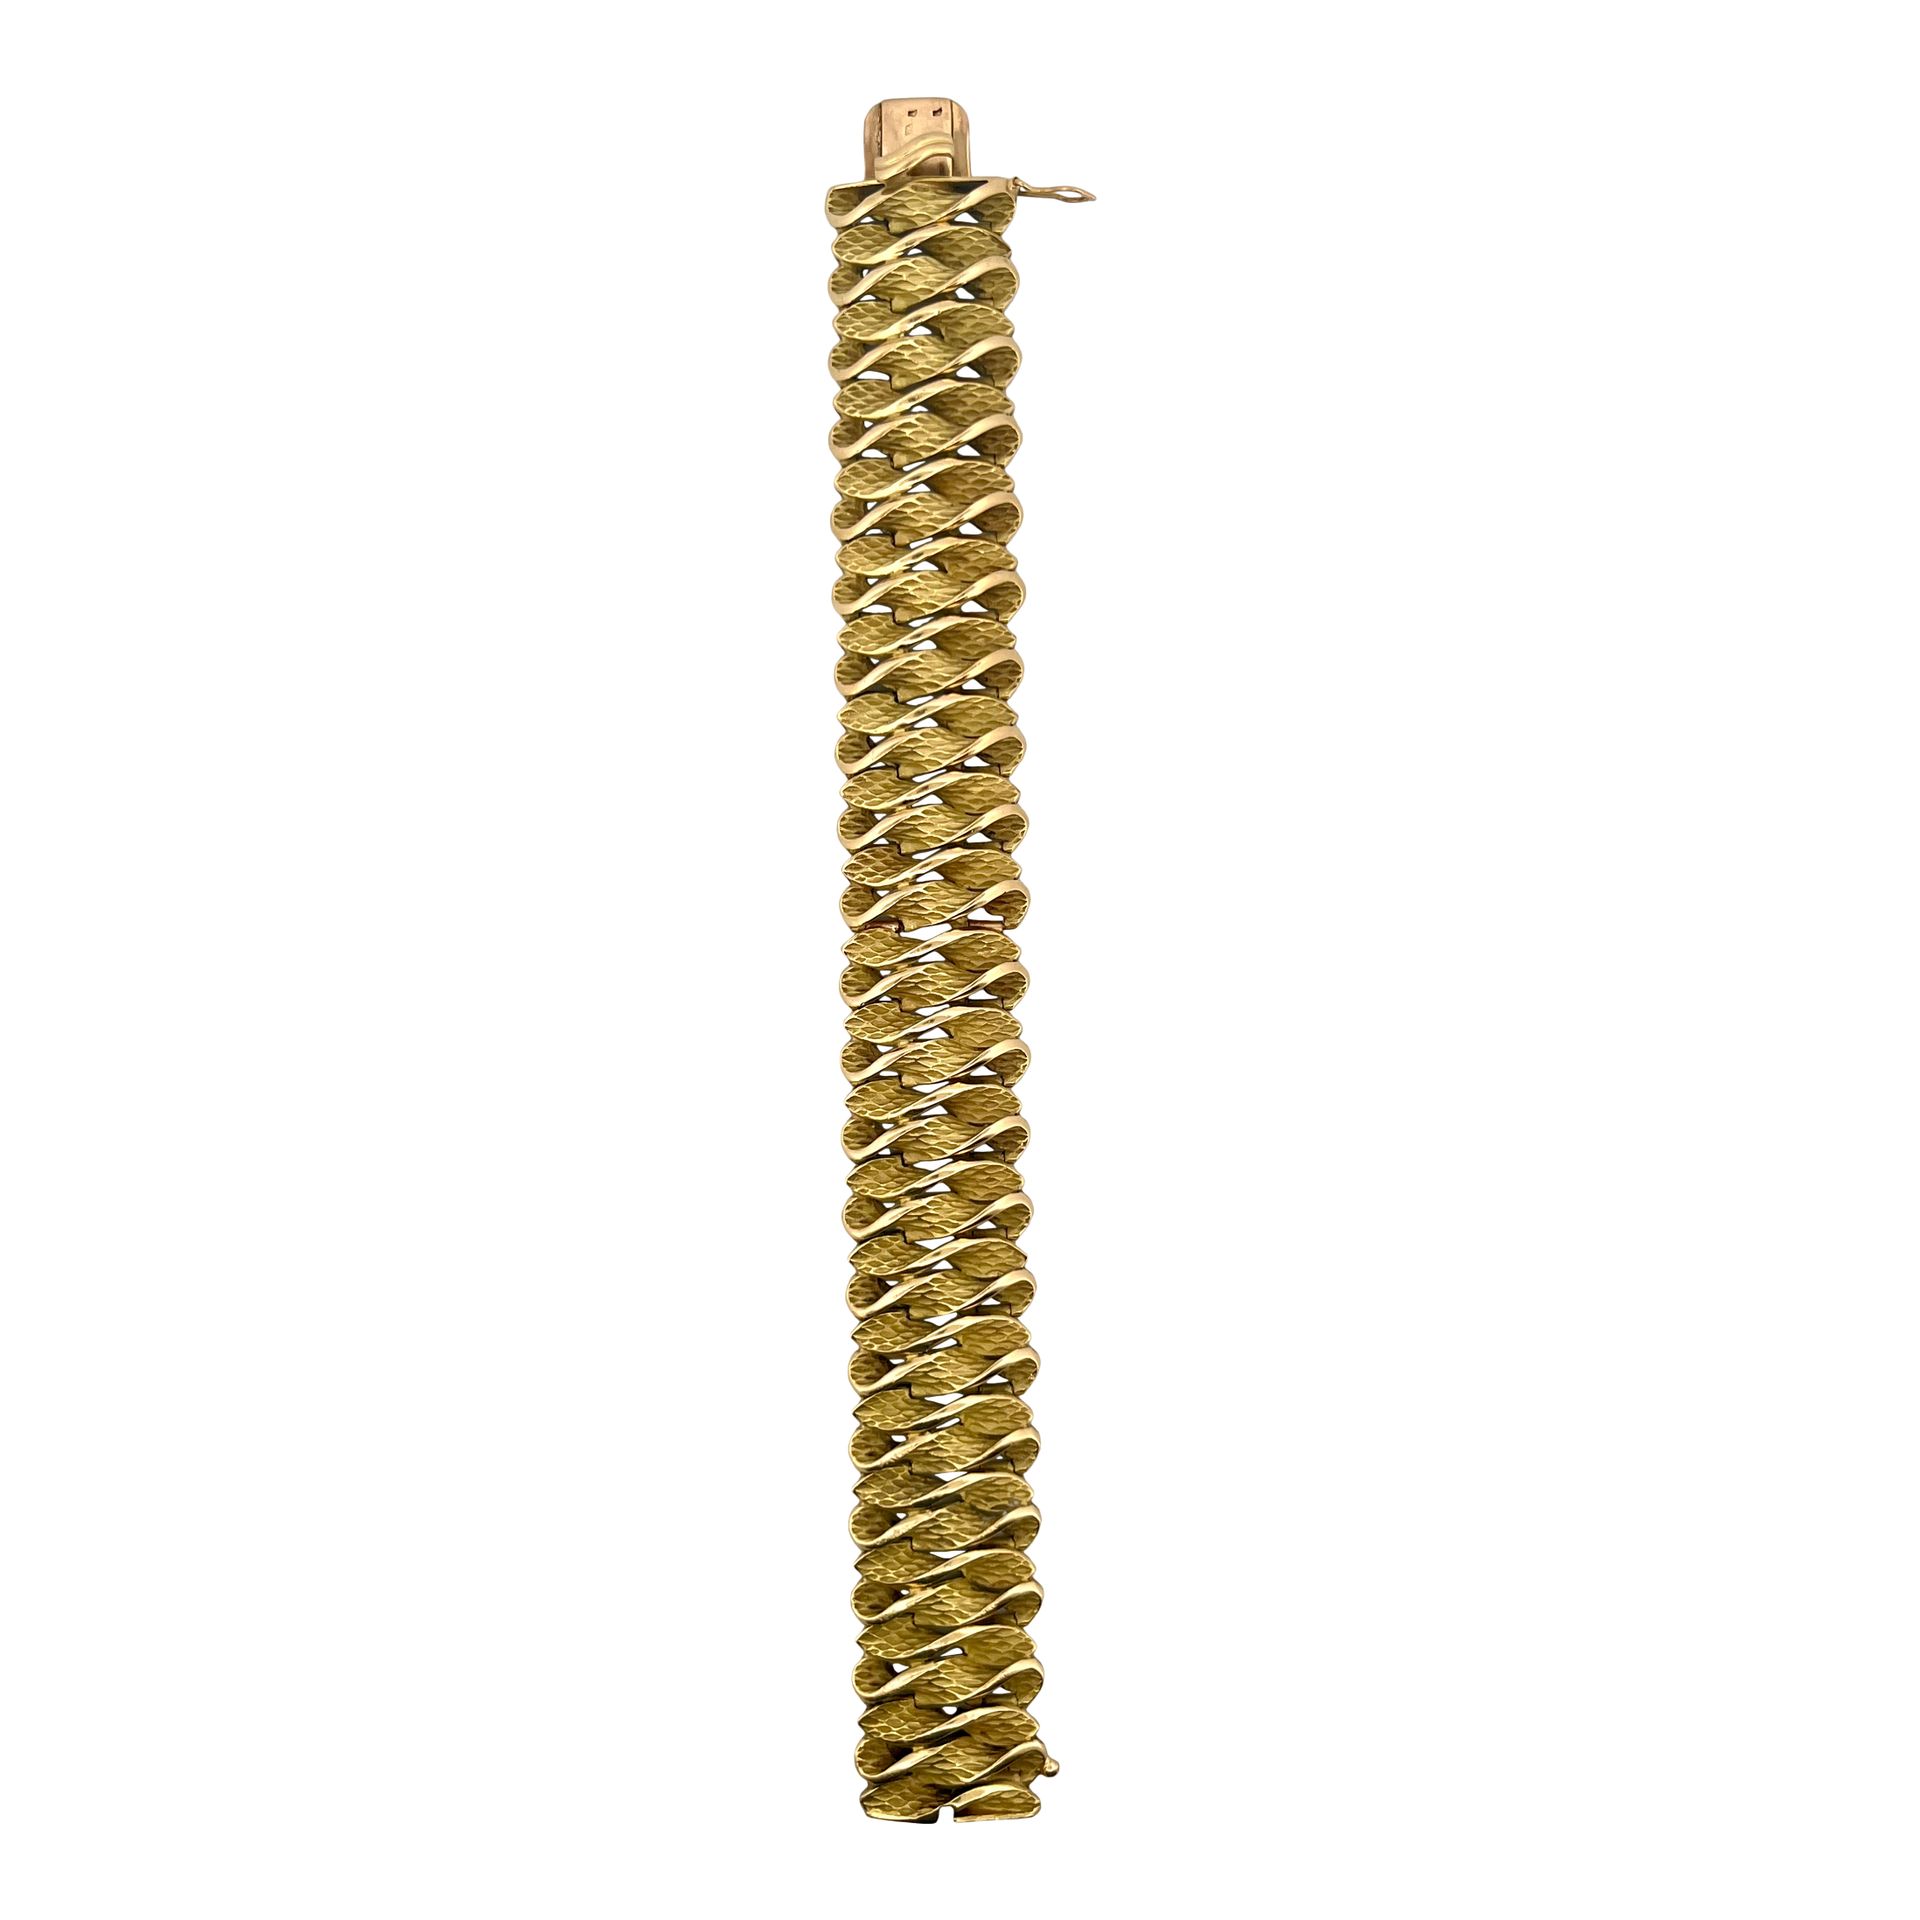 Null 手镯
拿着一个有质感和扭曲的黄金链接。镶嵌在18K黄金中。安全扣。法国的工作。 
长度：18.5厘米。 
宽度：2.20厘米。 
毛重：69.38克。&hellip;